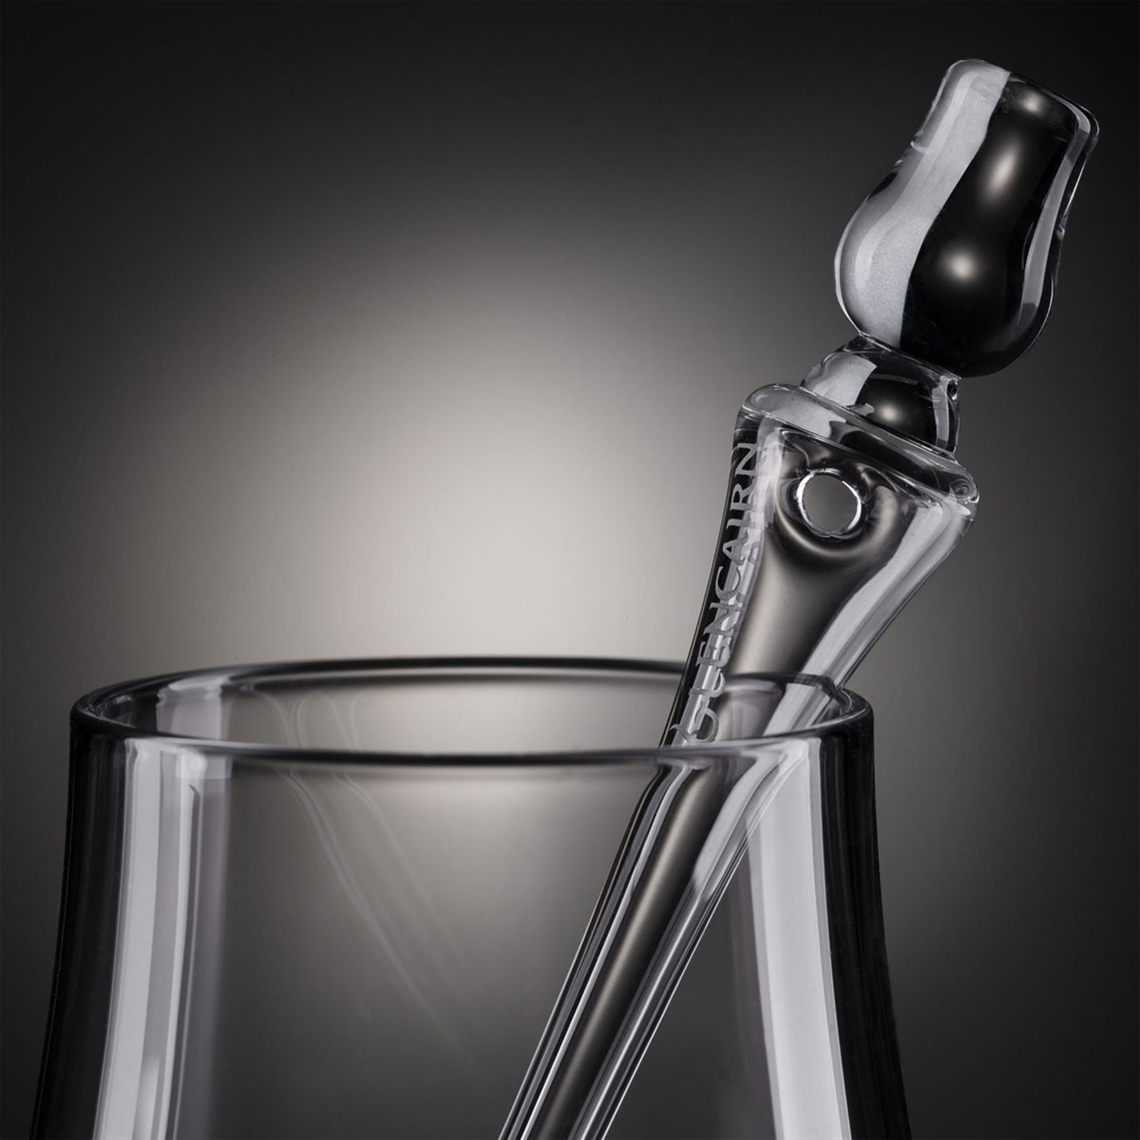 The Glencairn Whisky Glass Water Pipette